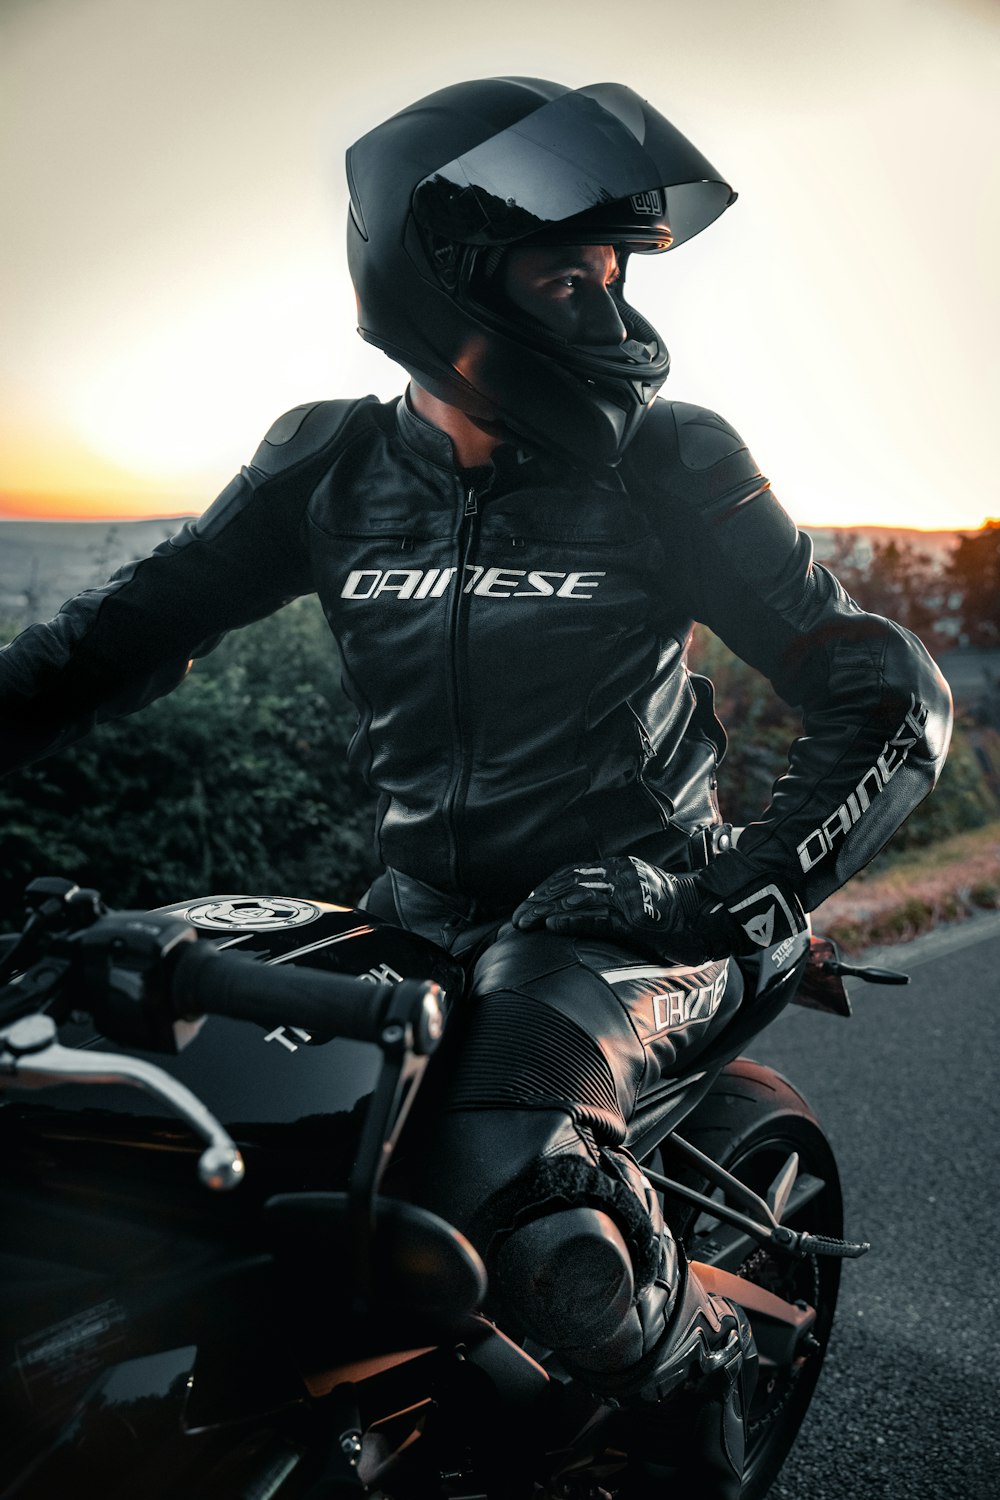 Mann in schwarzer Lederjacke fährt tagsüber Motorrad